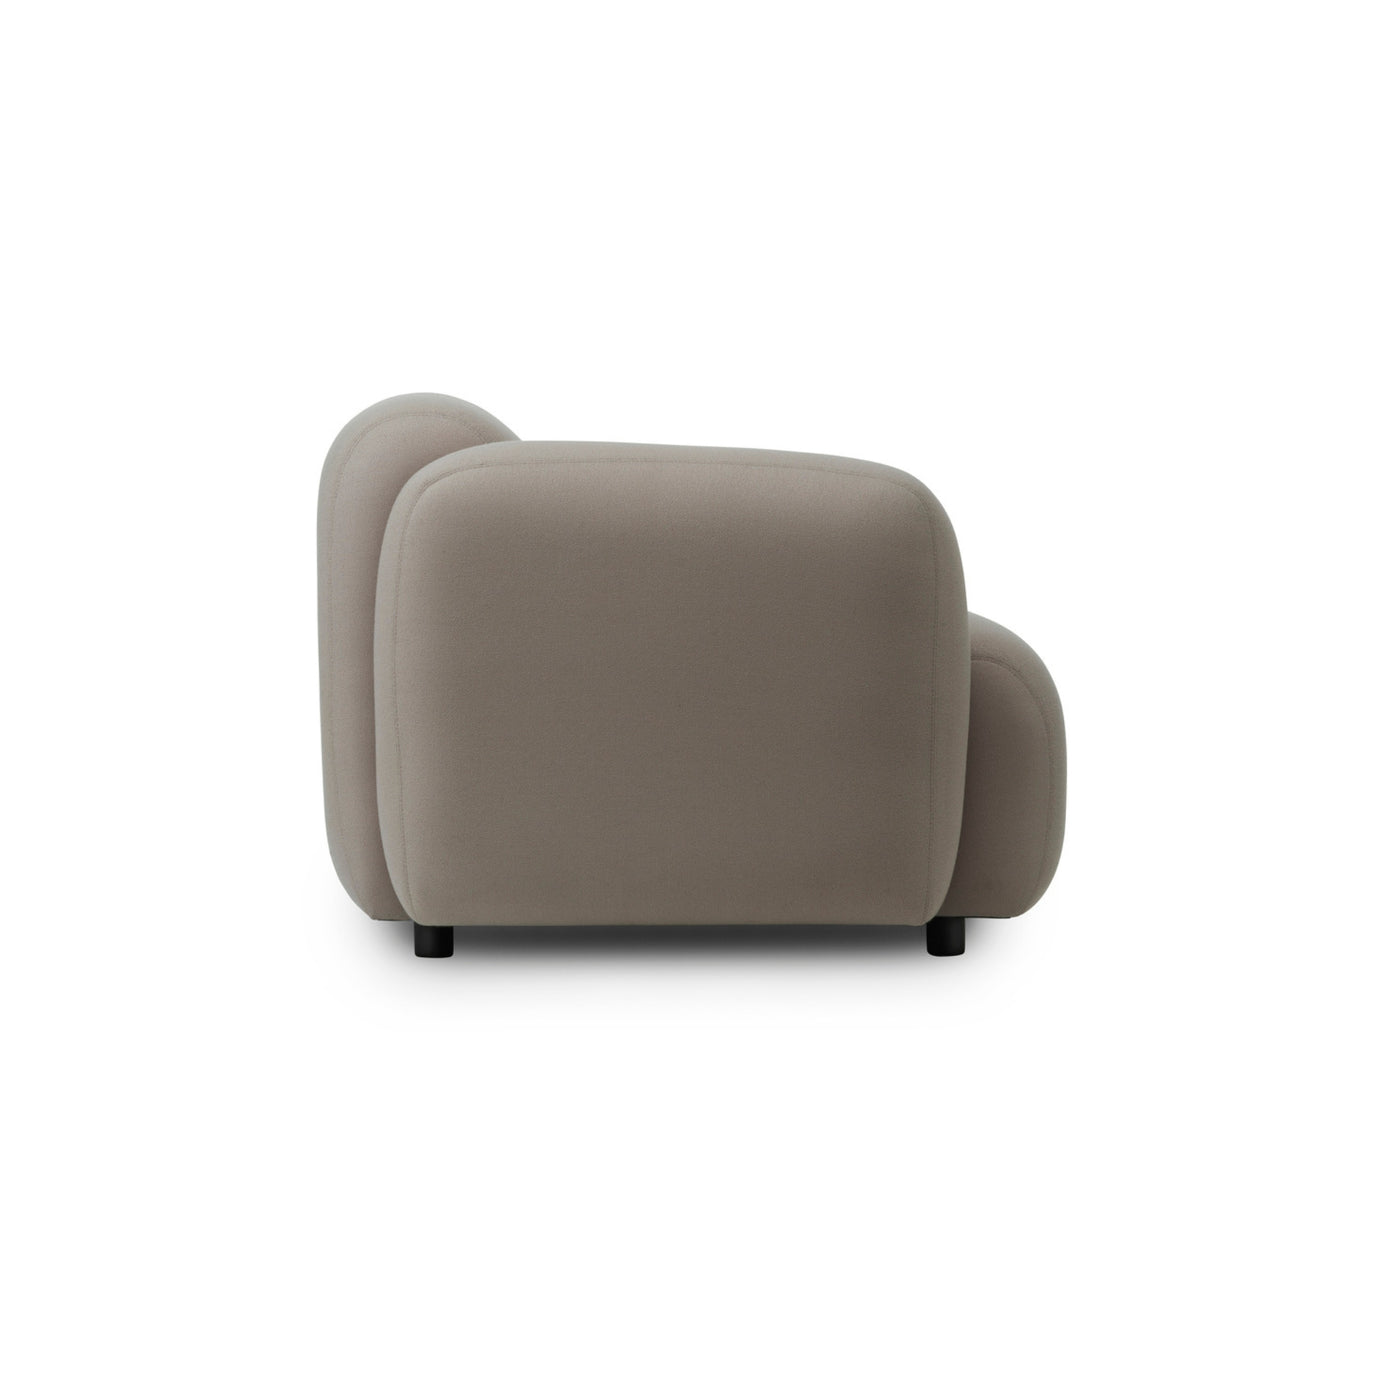 Normann Copenhagen Swell 3 Seater Sofa at someday designs. #colour_aquarius-ceres